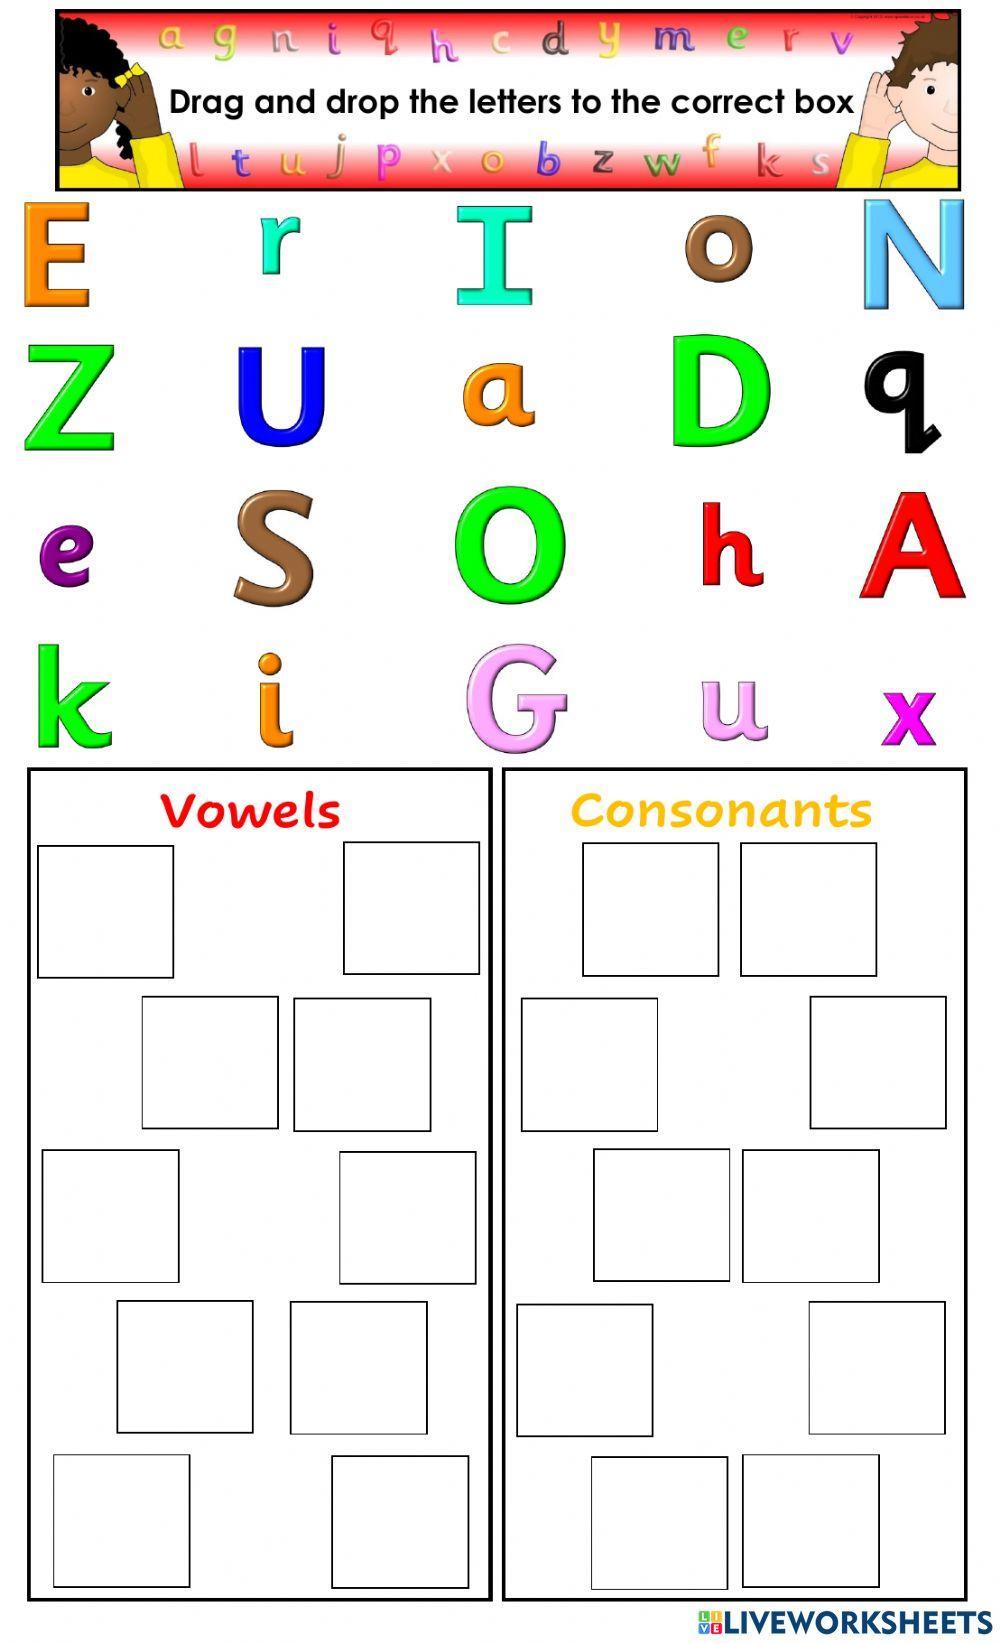 Vowel & Consonant Sort